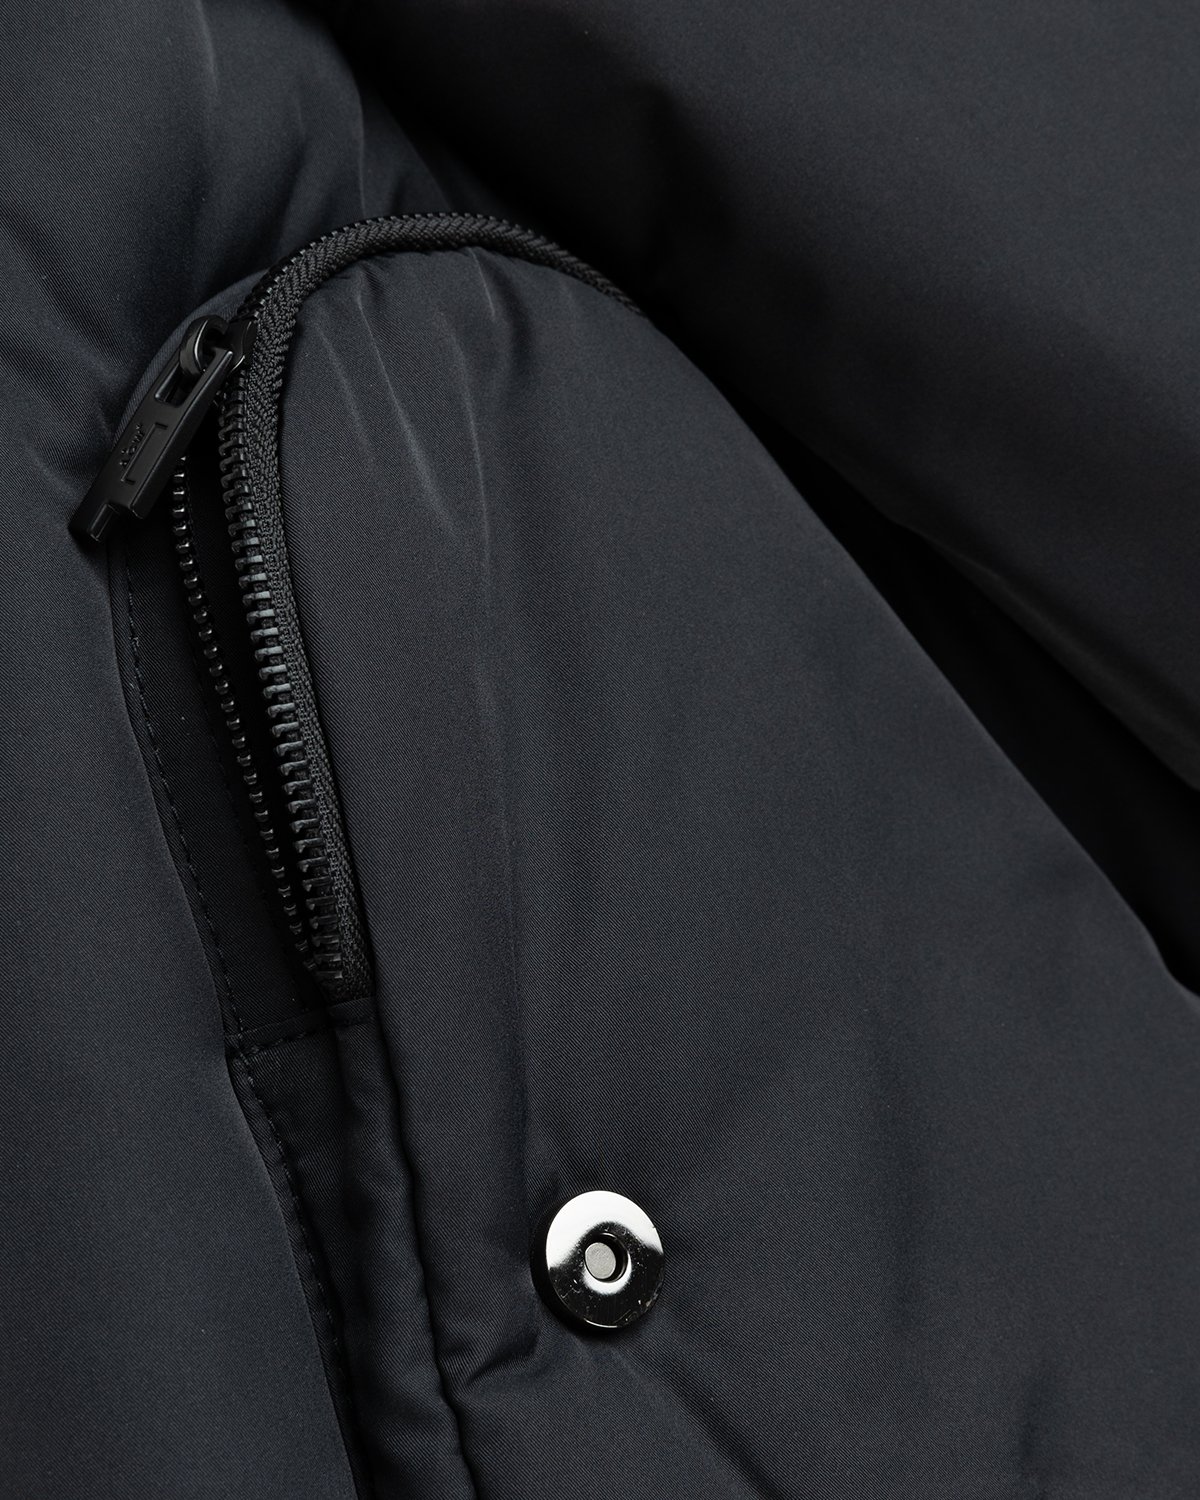 A-Cold-Wall* - Semi Gilet Body Bag Black - Accessories - Black - Image 6